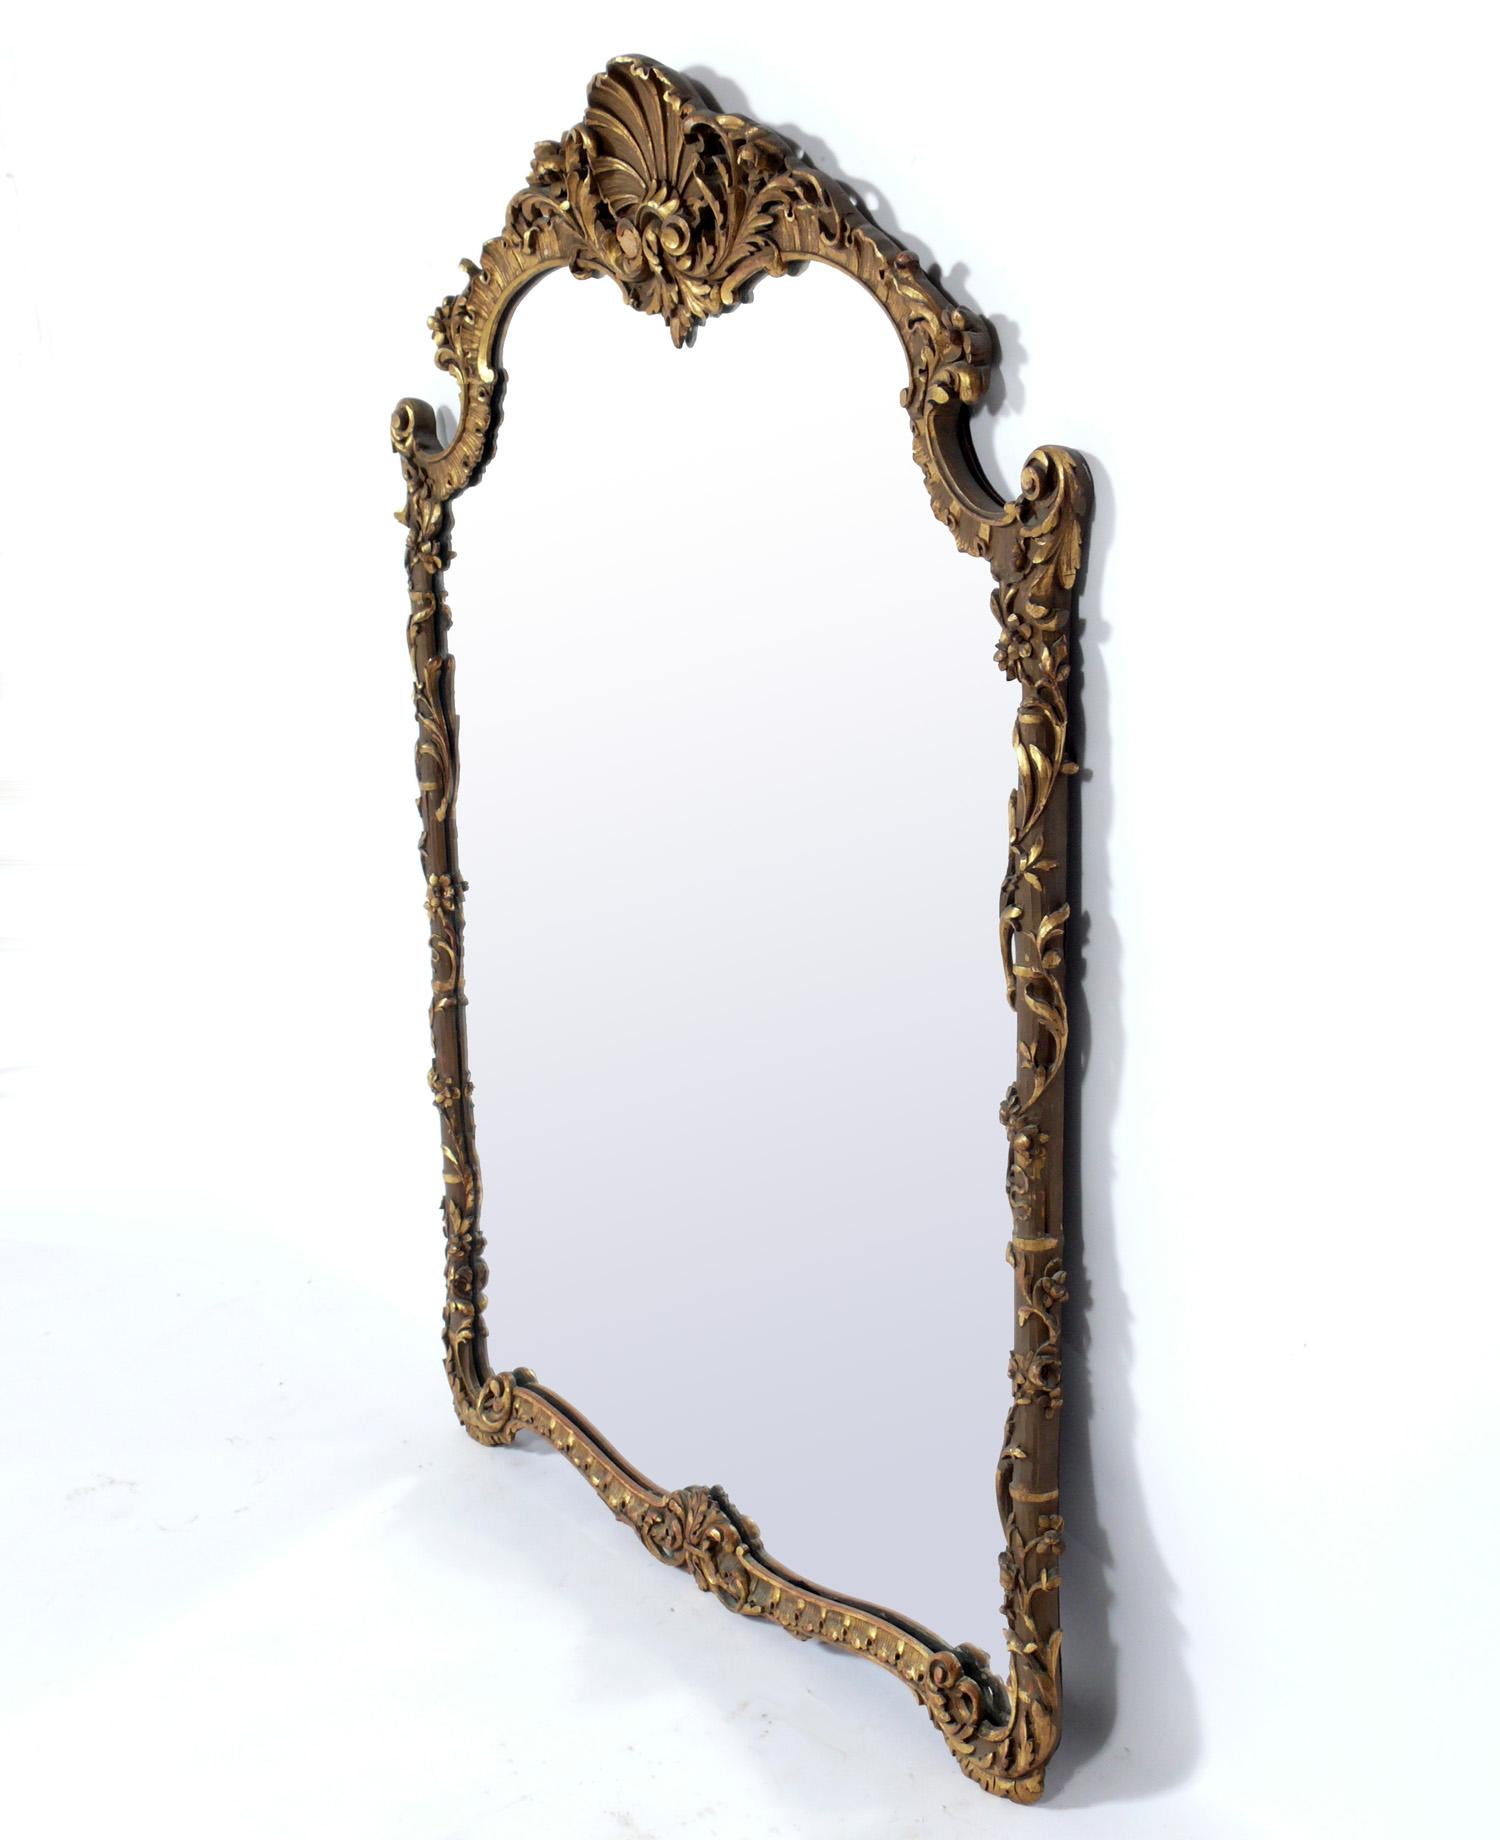 ornate mirror